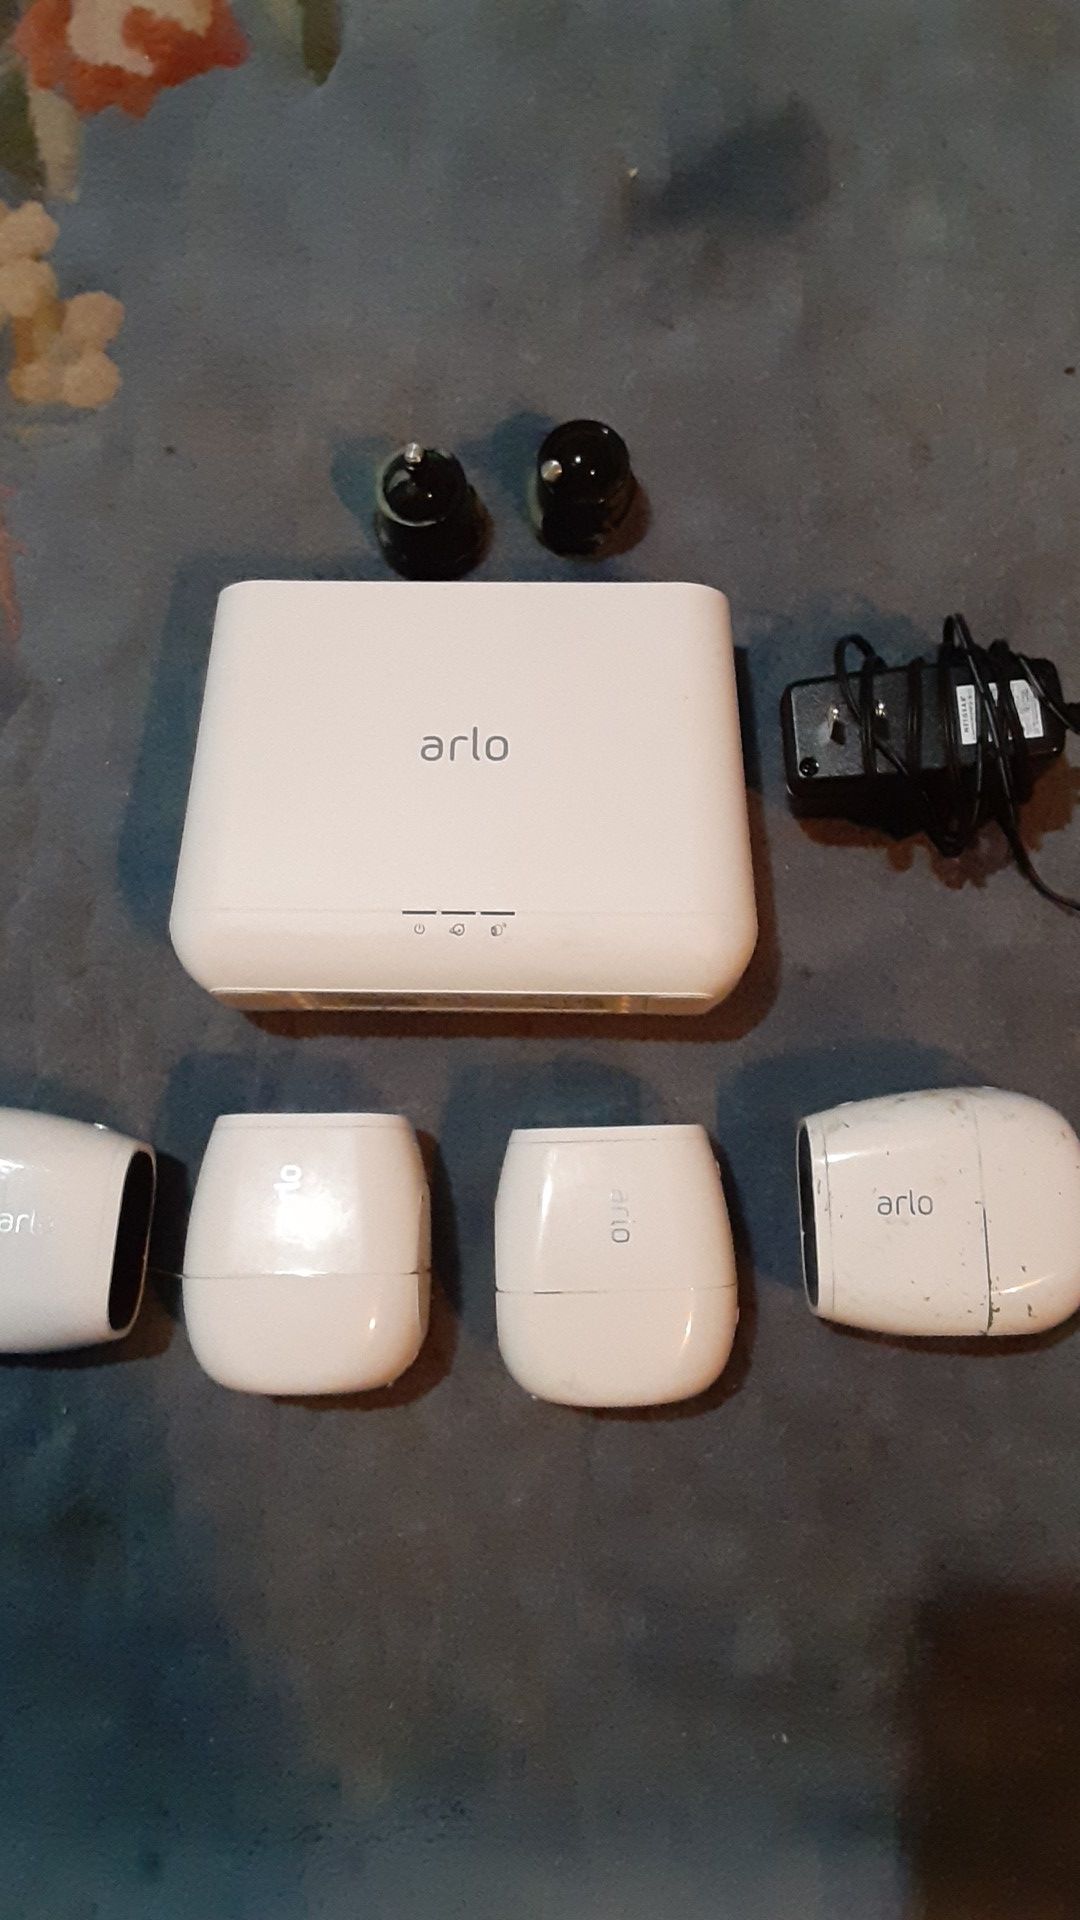 Arlo Pro 2 wireless home security cameras